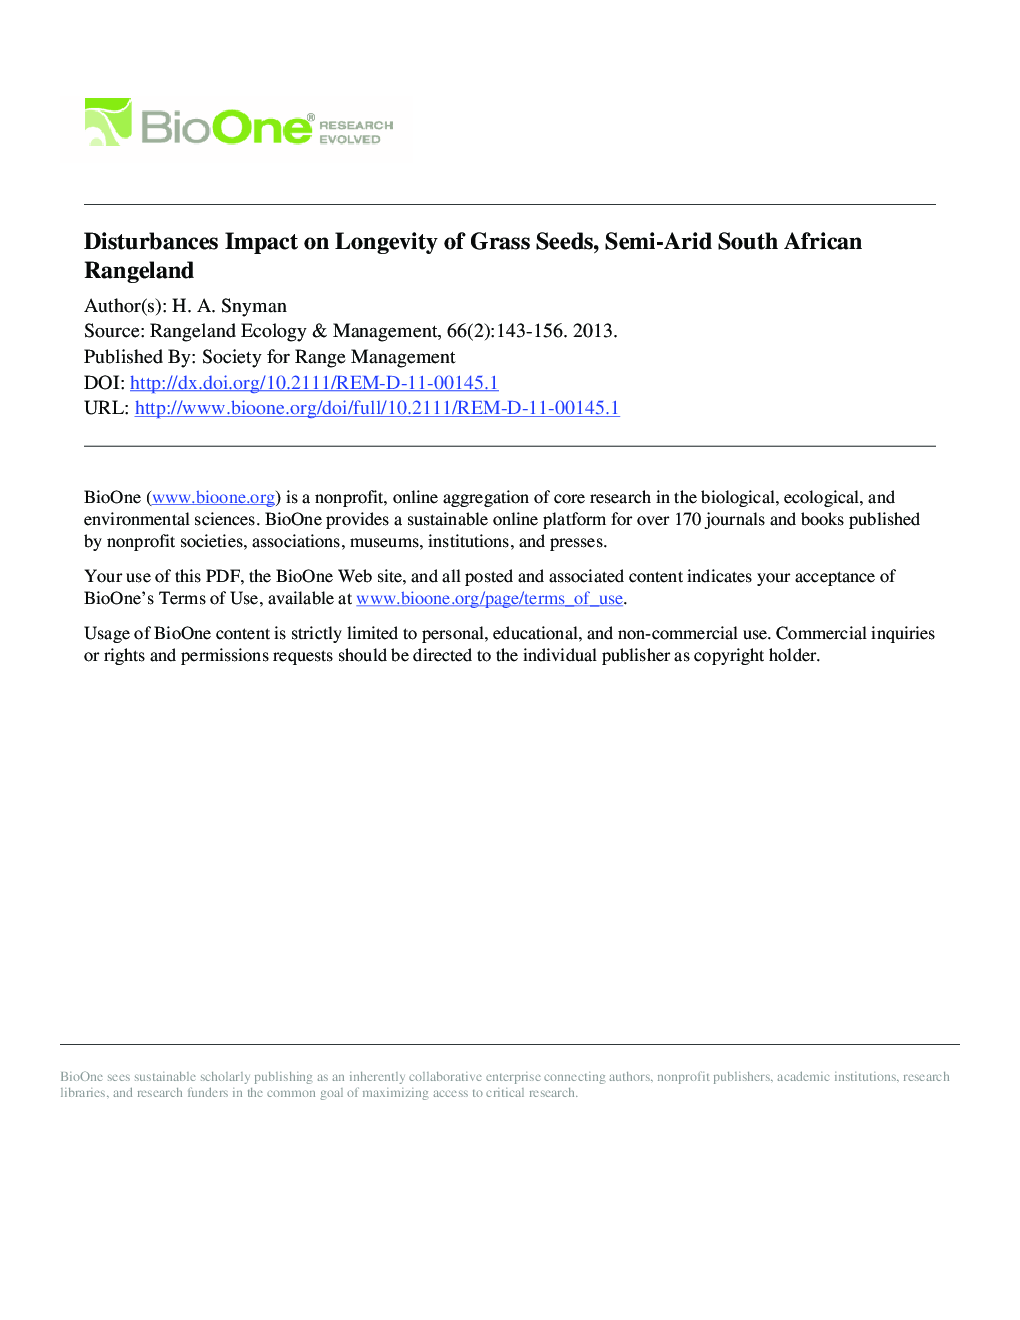 Disturbances Impact on Longevity of Grass Seeds, Semi-Arid South African Rangeland